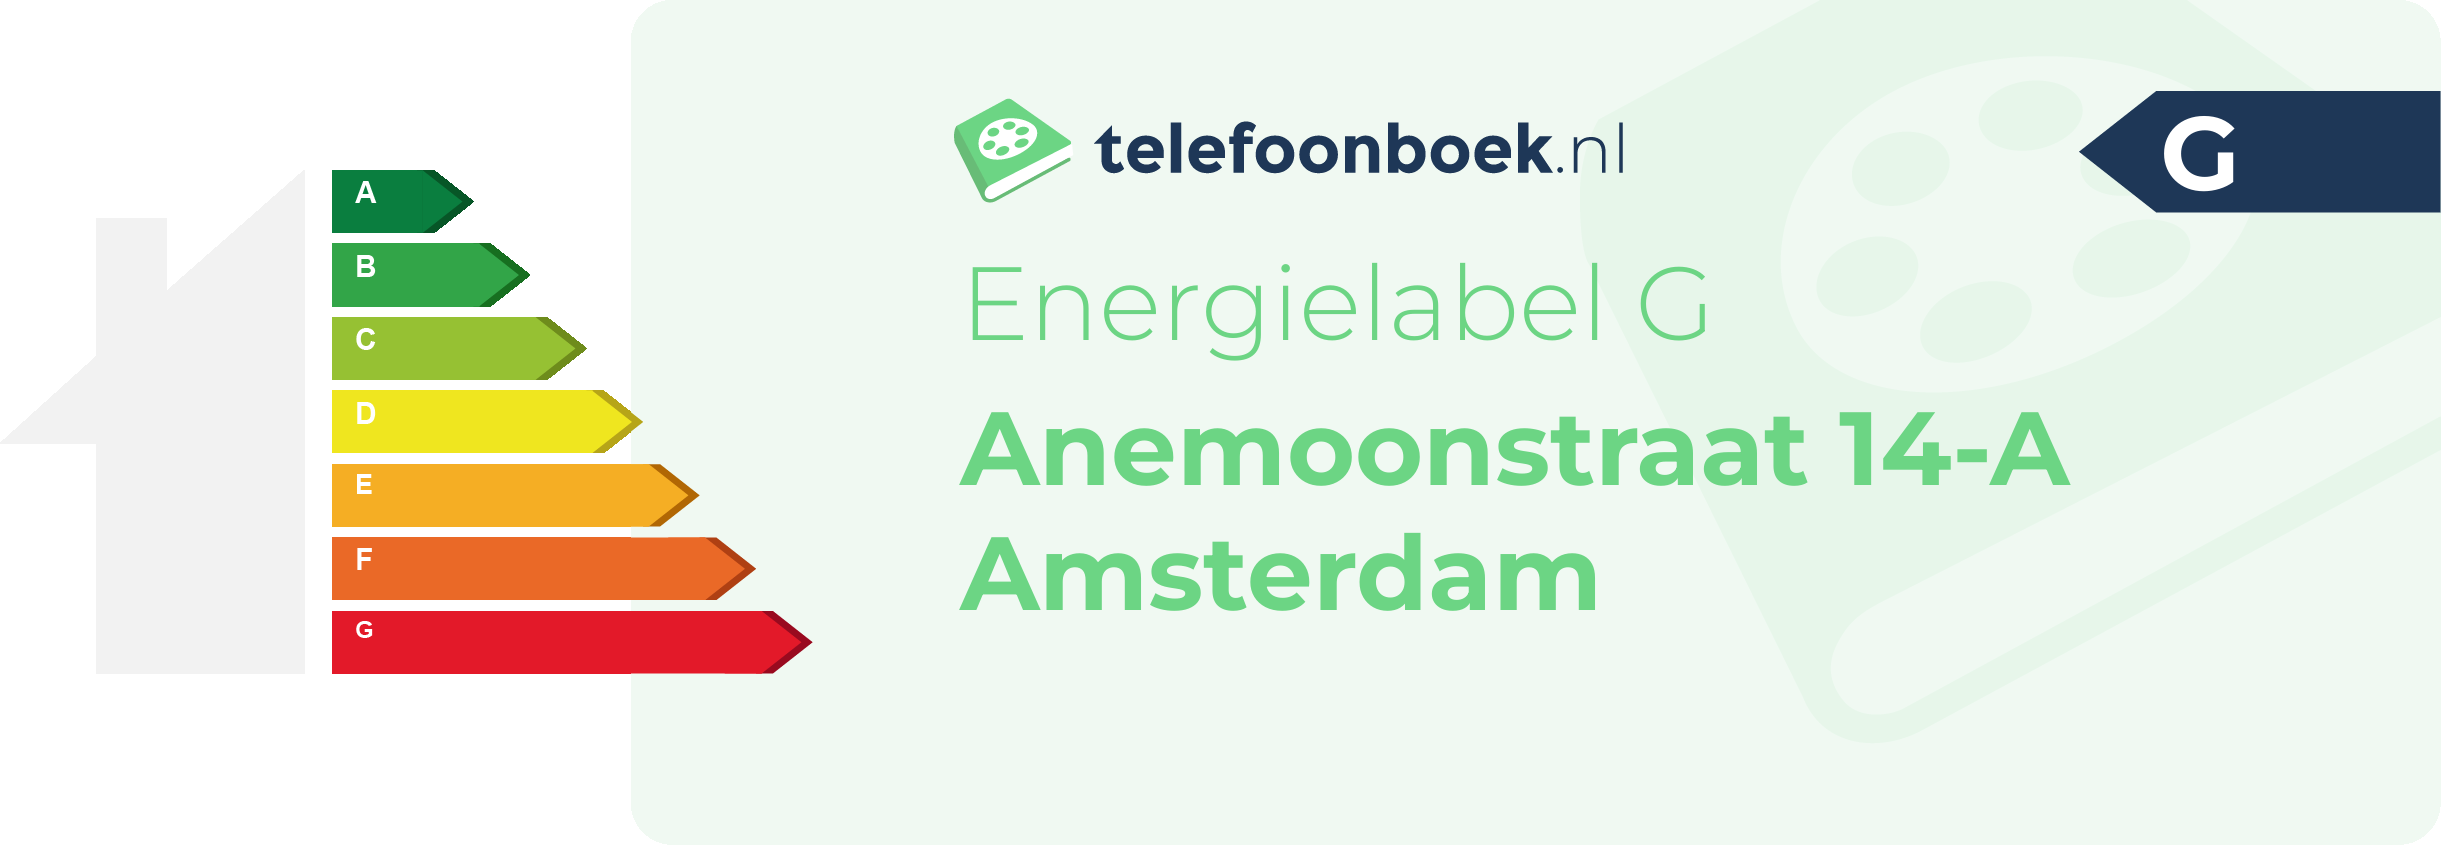 Energielabel Anemoonstraat 14-A Amsterdam